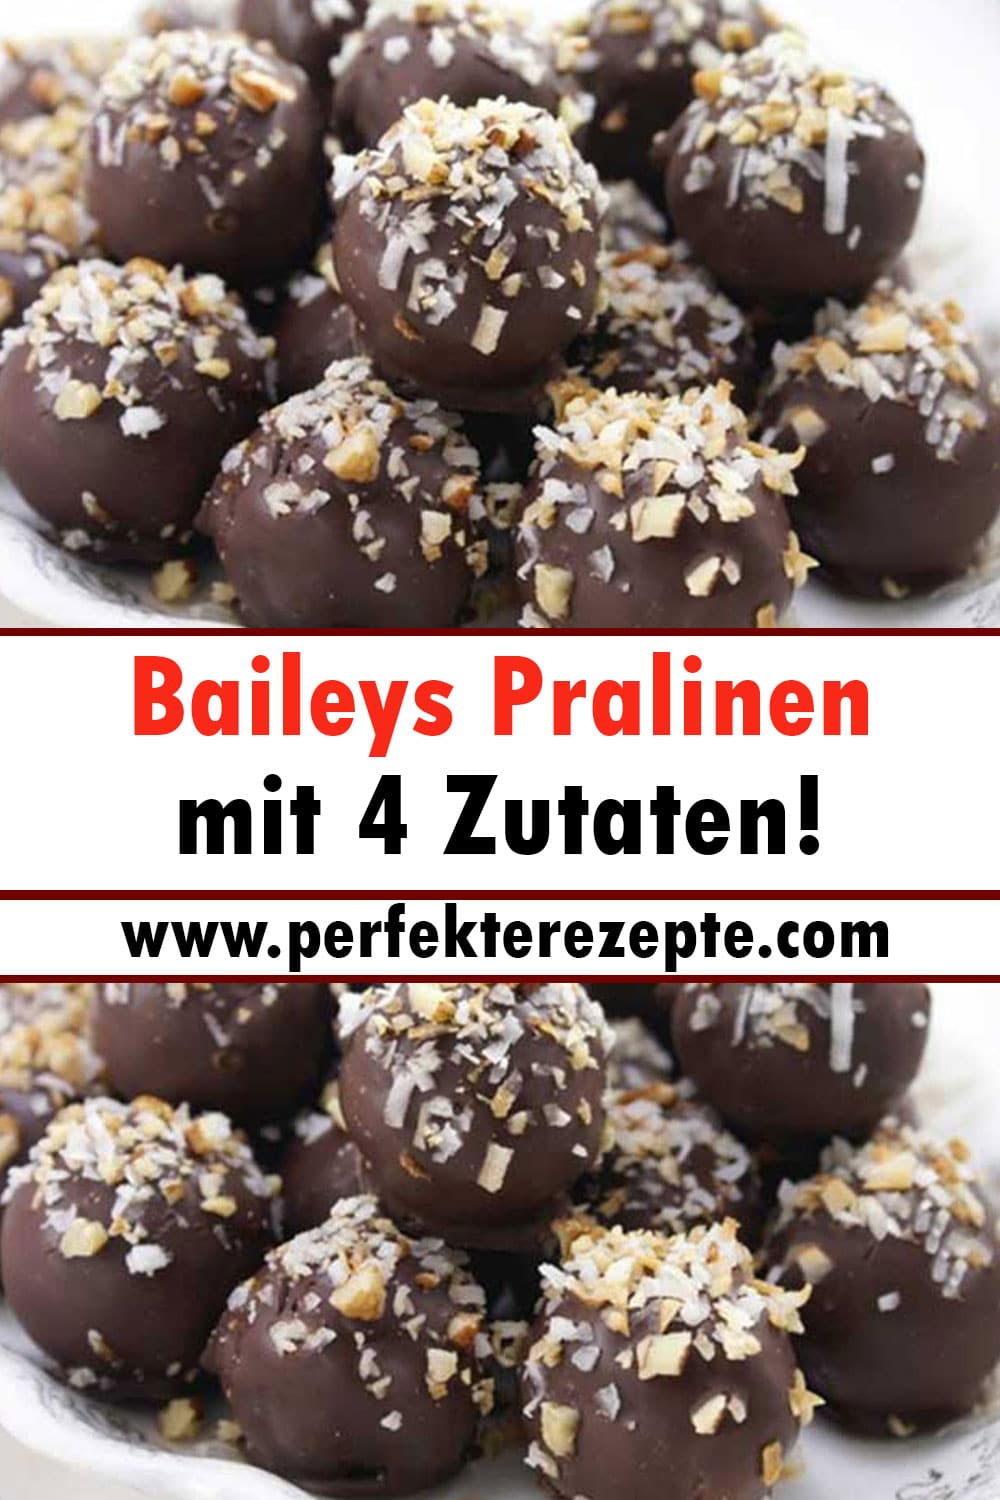 Baileys Pralinen Rezept mit 4 Zutaten!